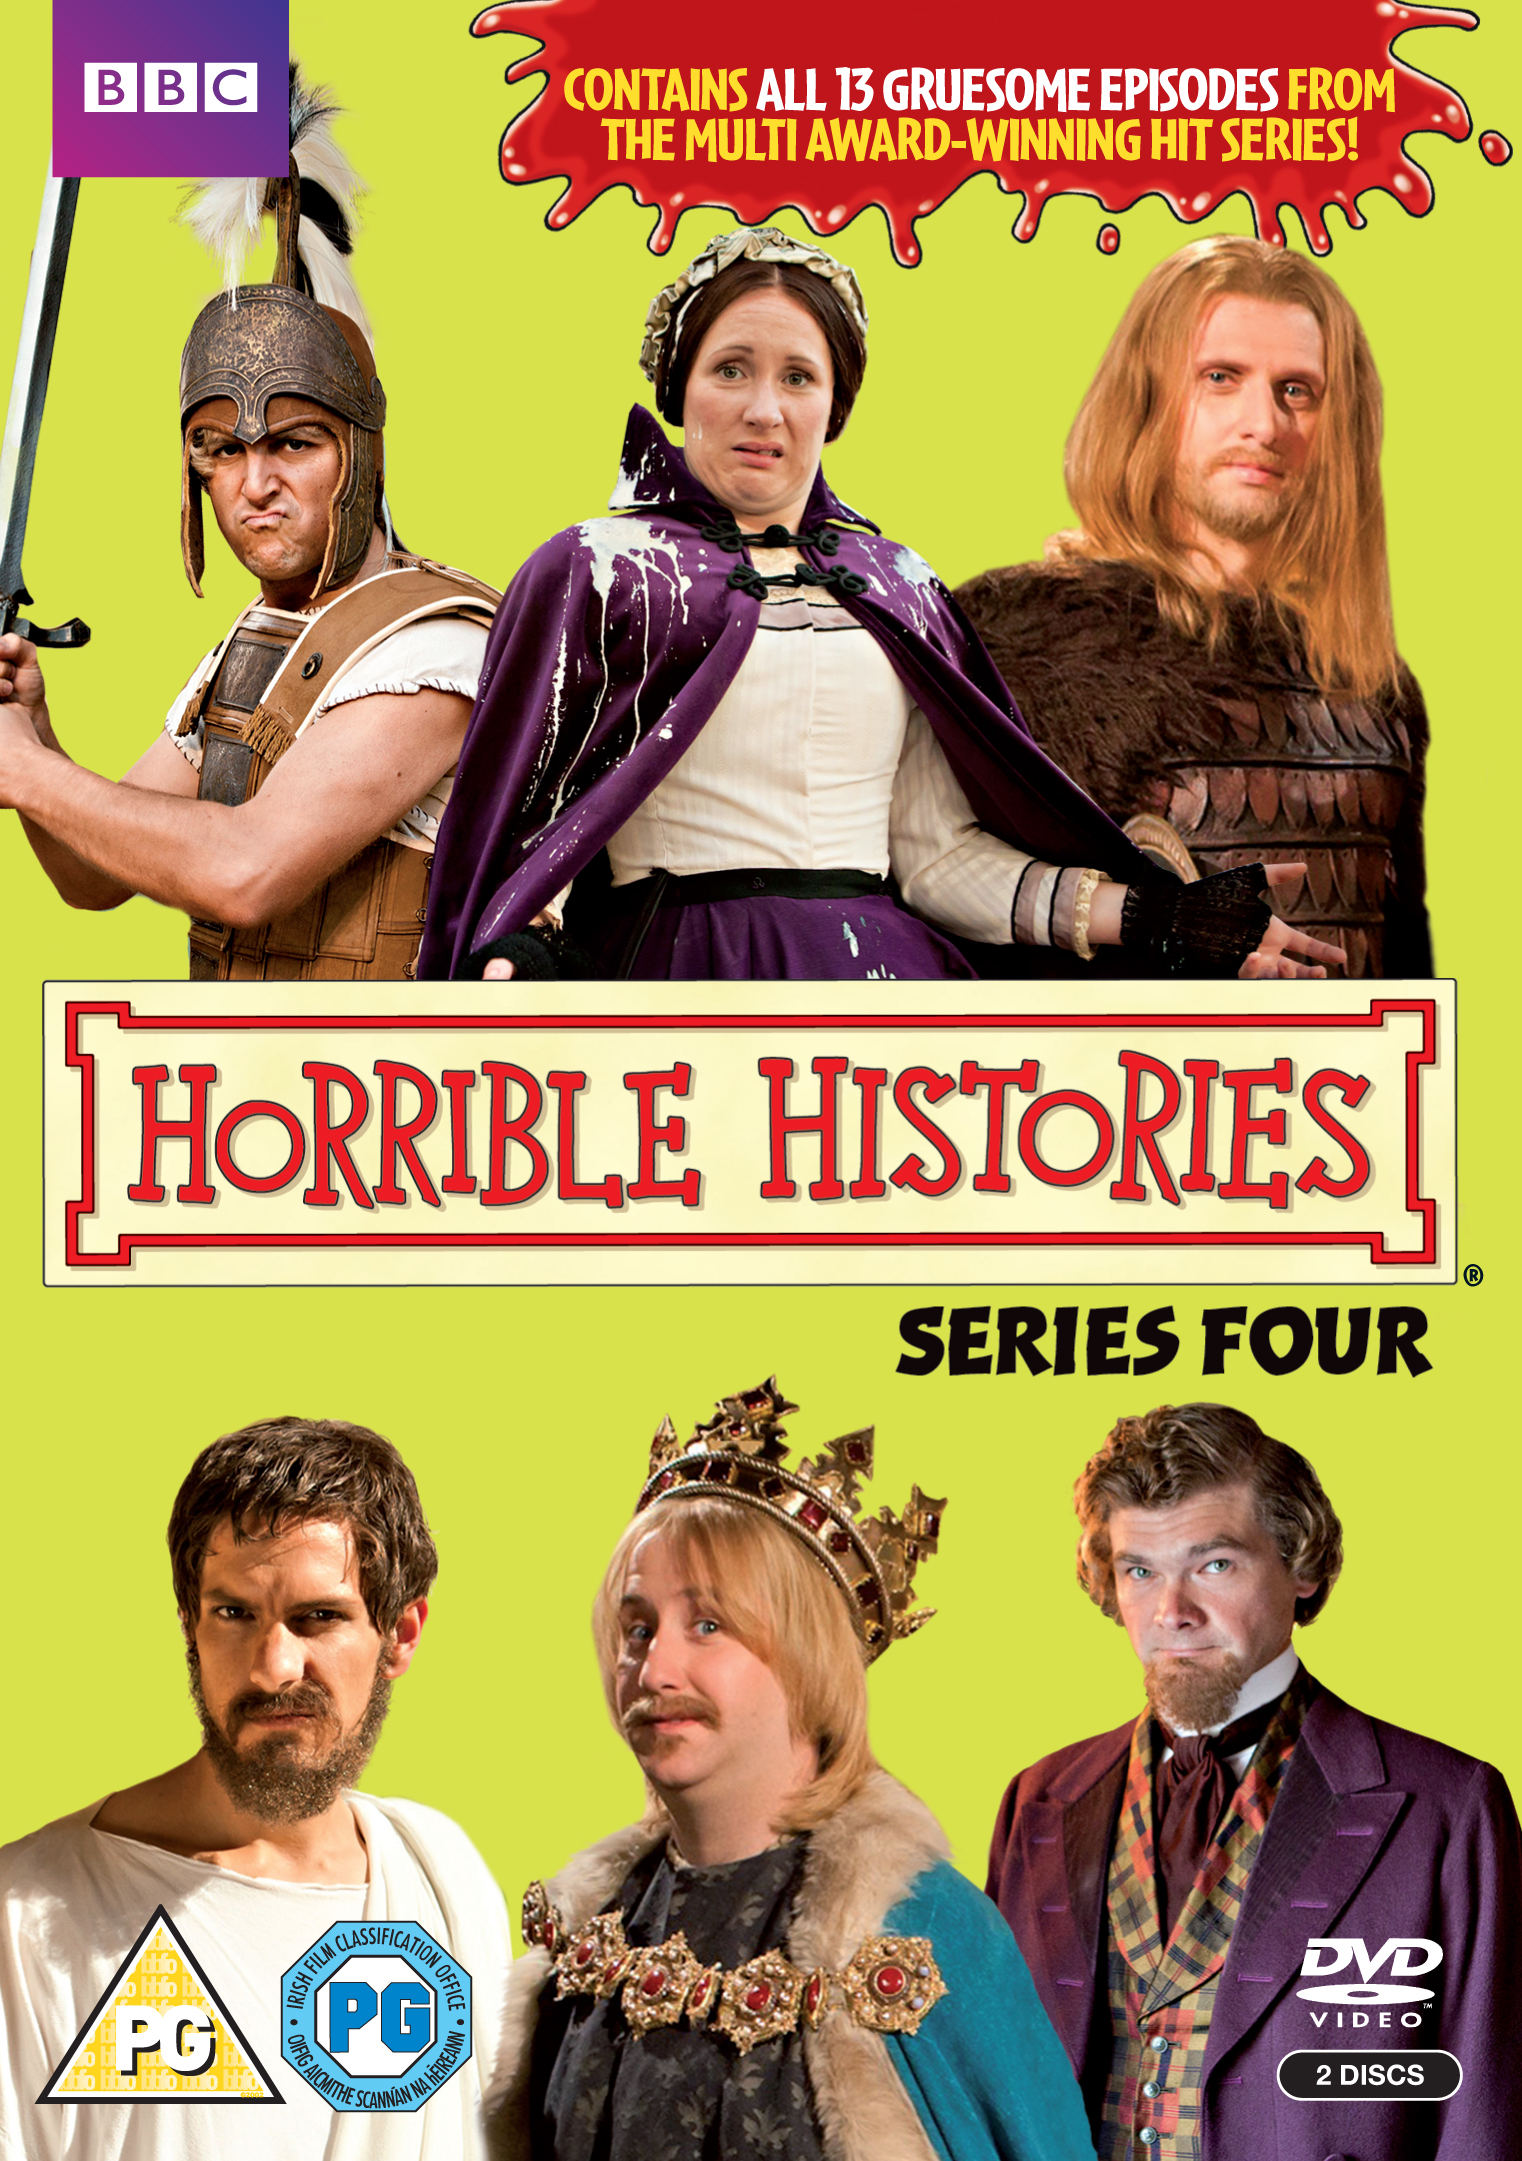 Horrible Histories: Series Four DVD